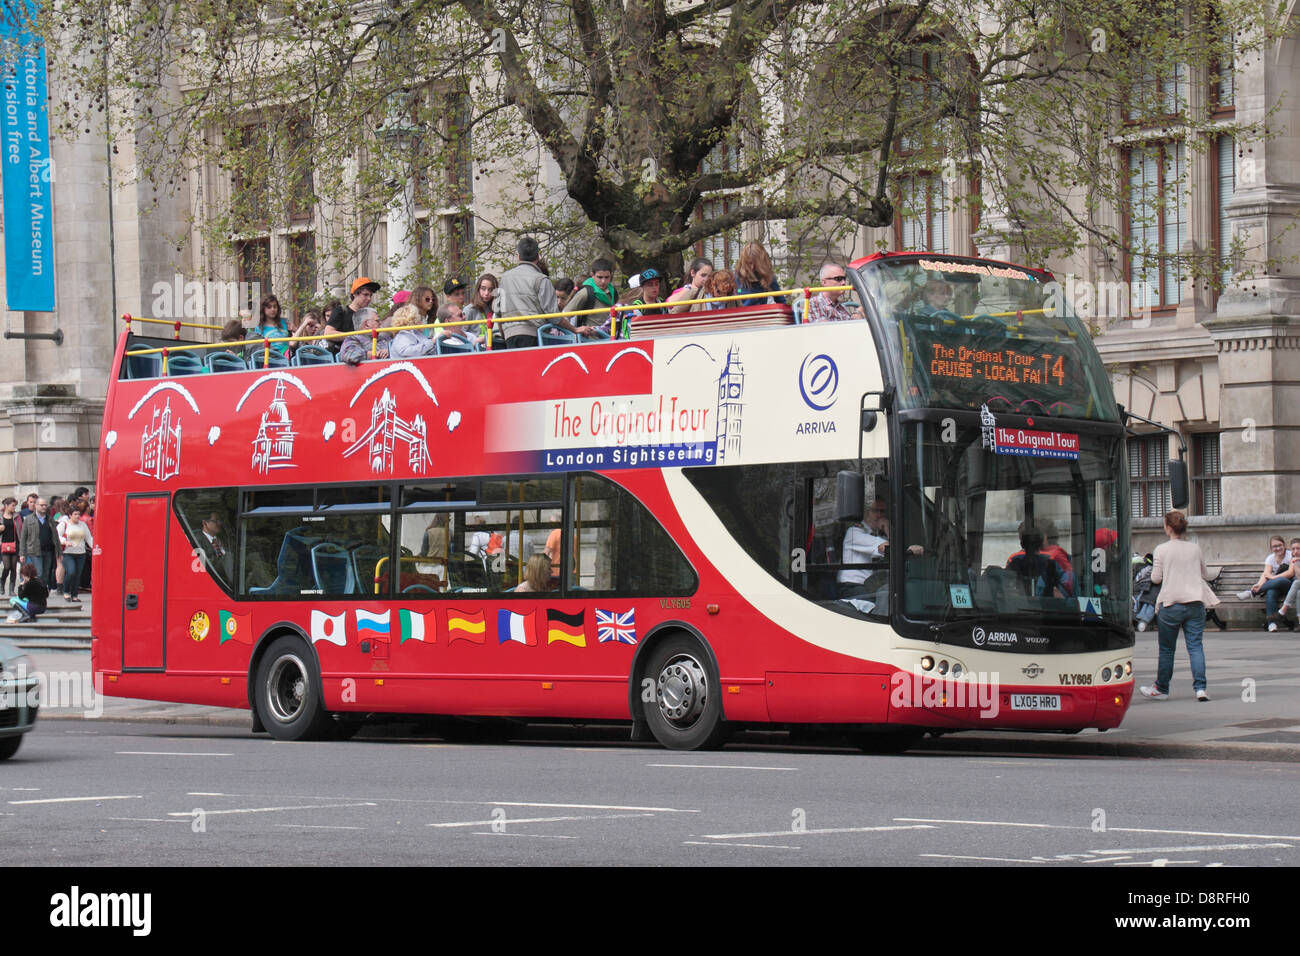 original bus tour london